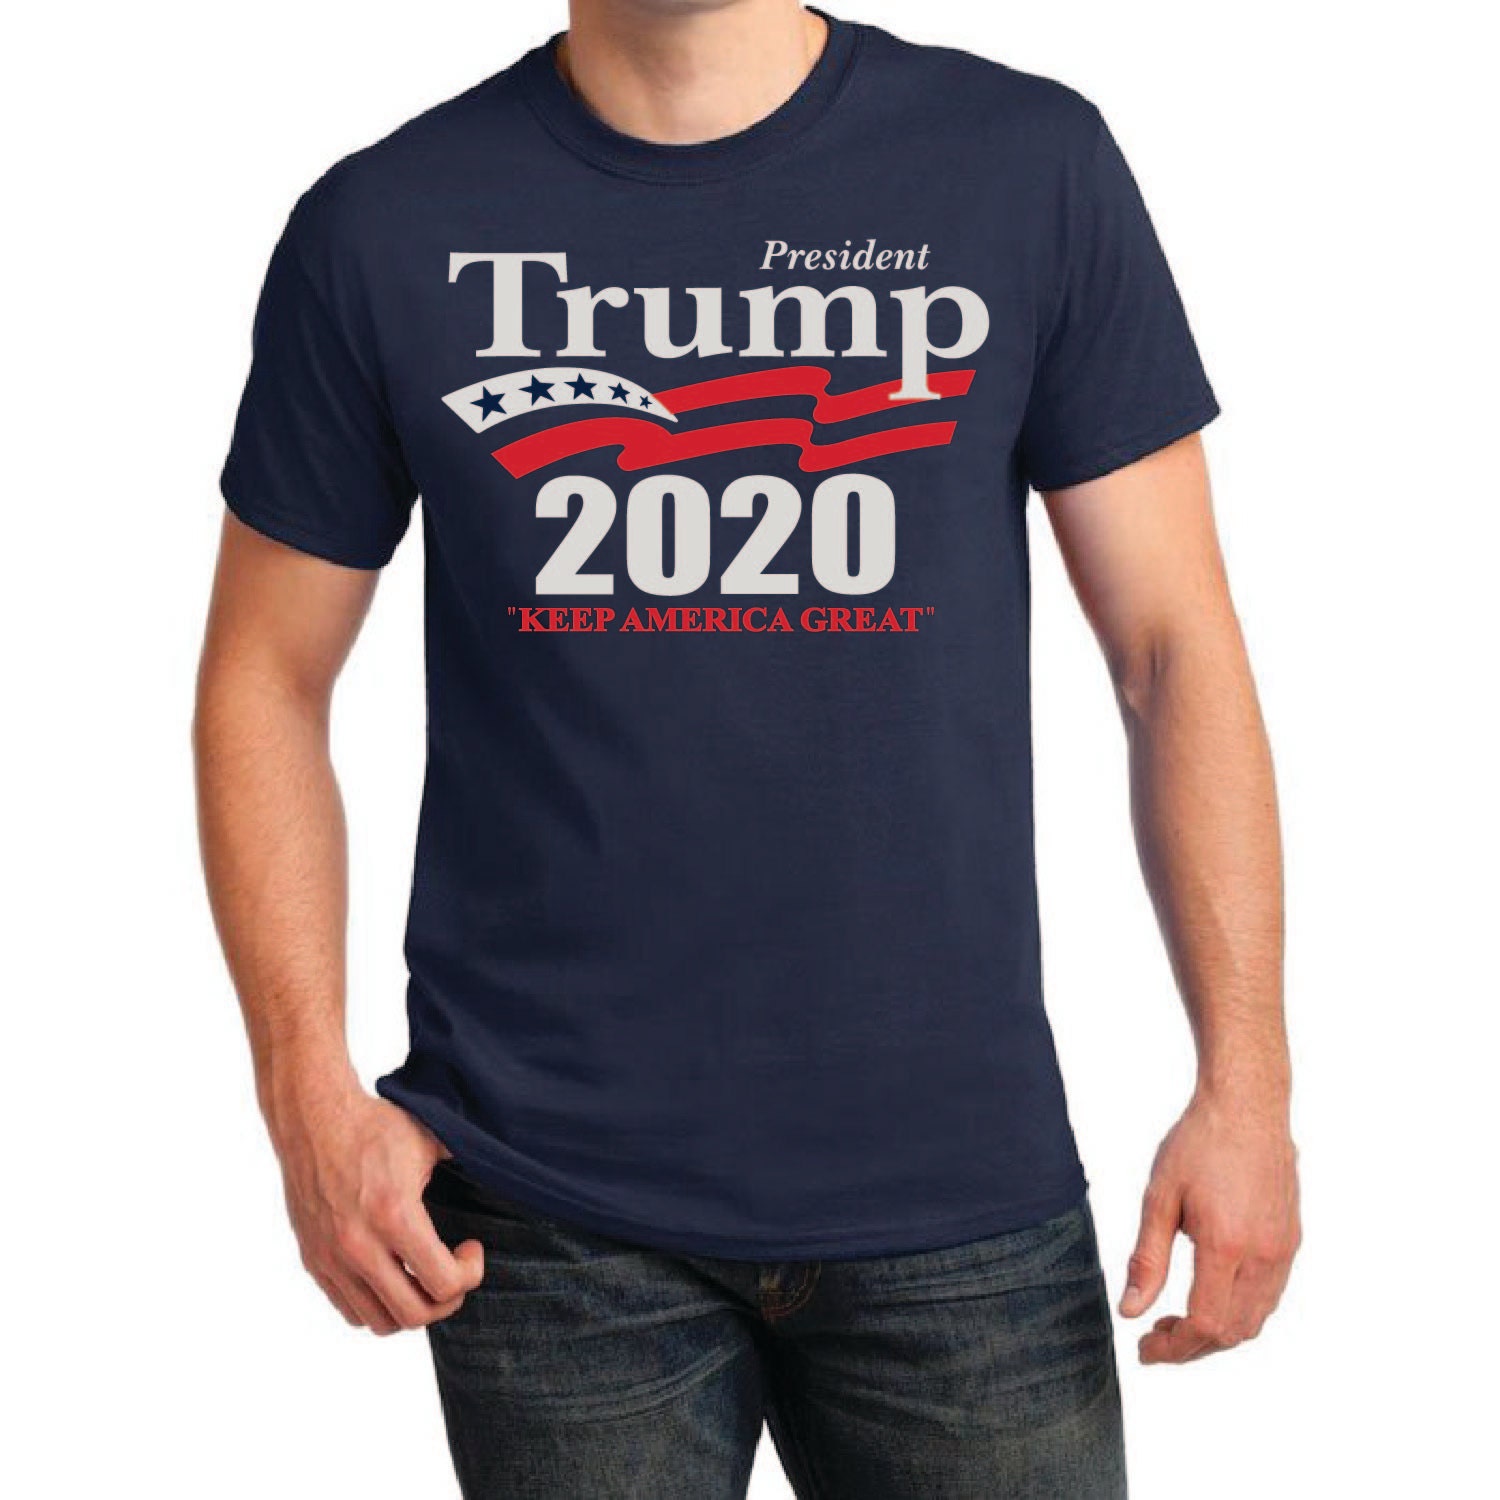 Donald Trump shirt t-shirt tshirt president 2020 2016